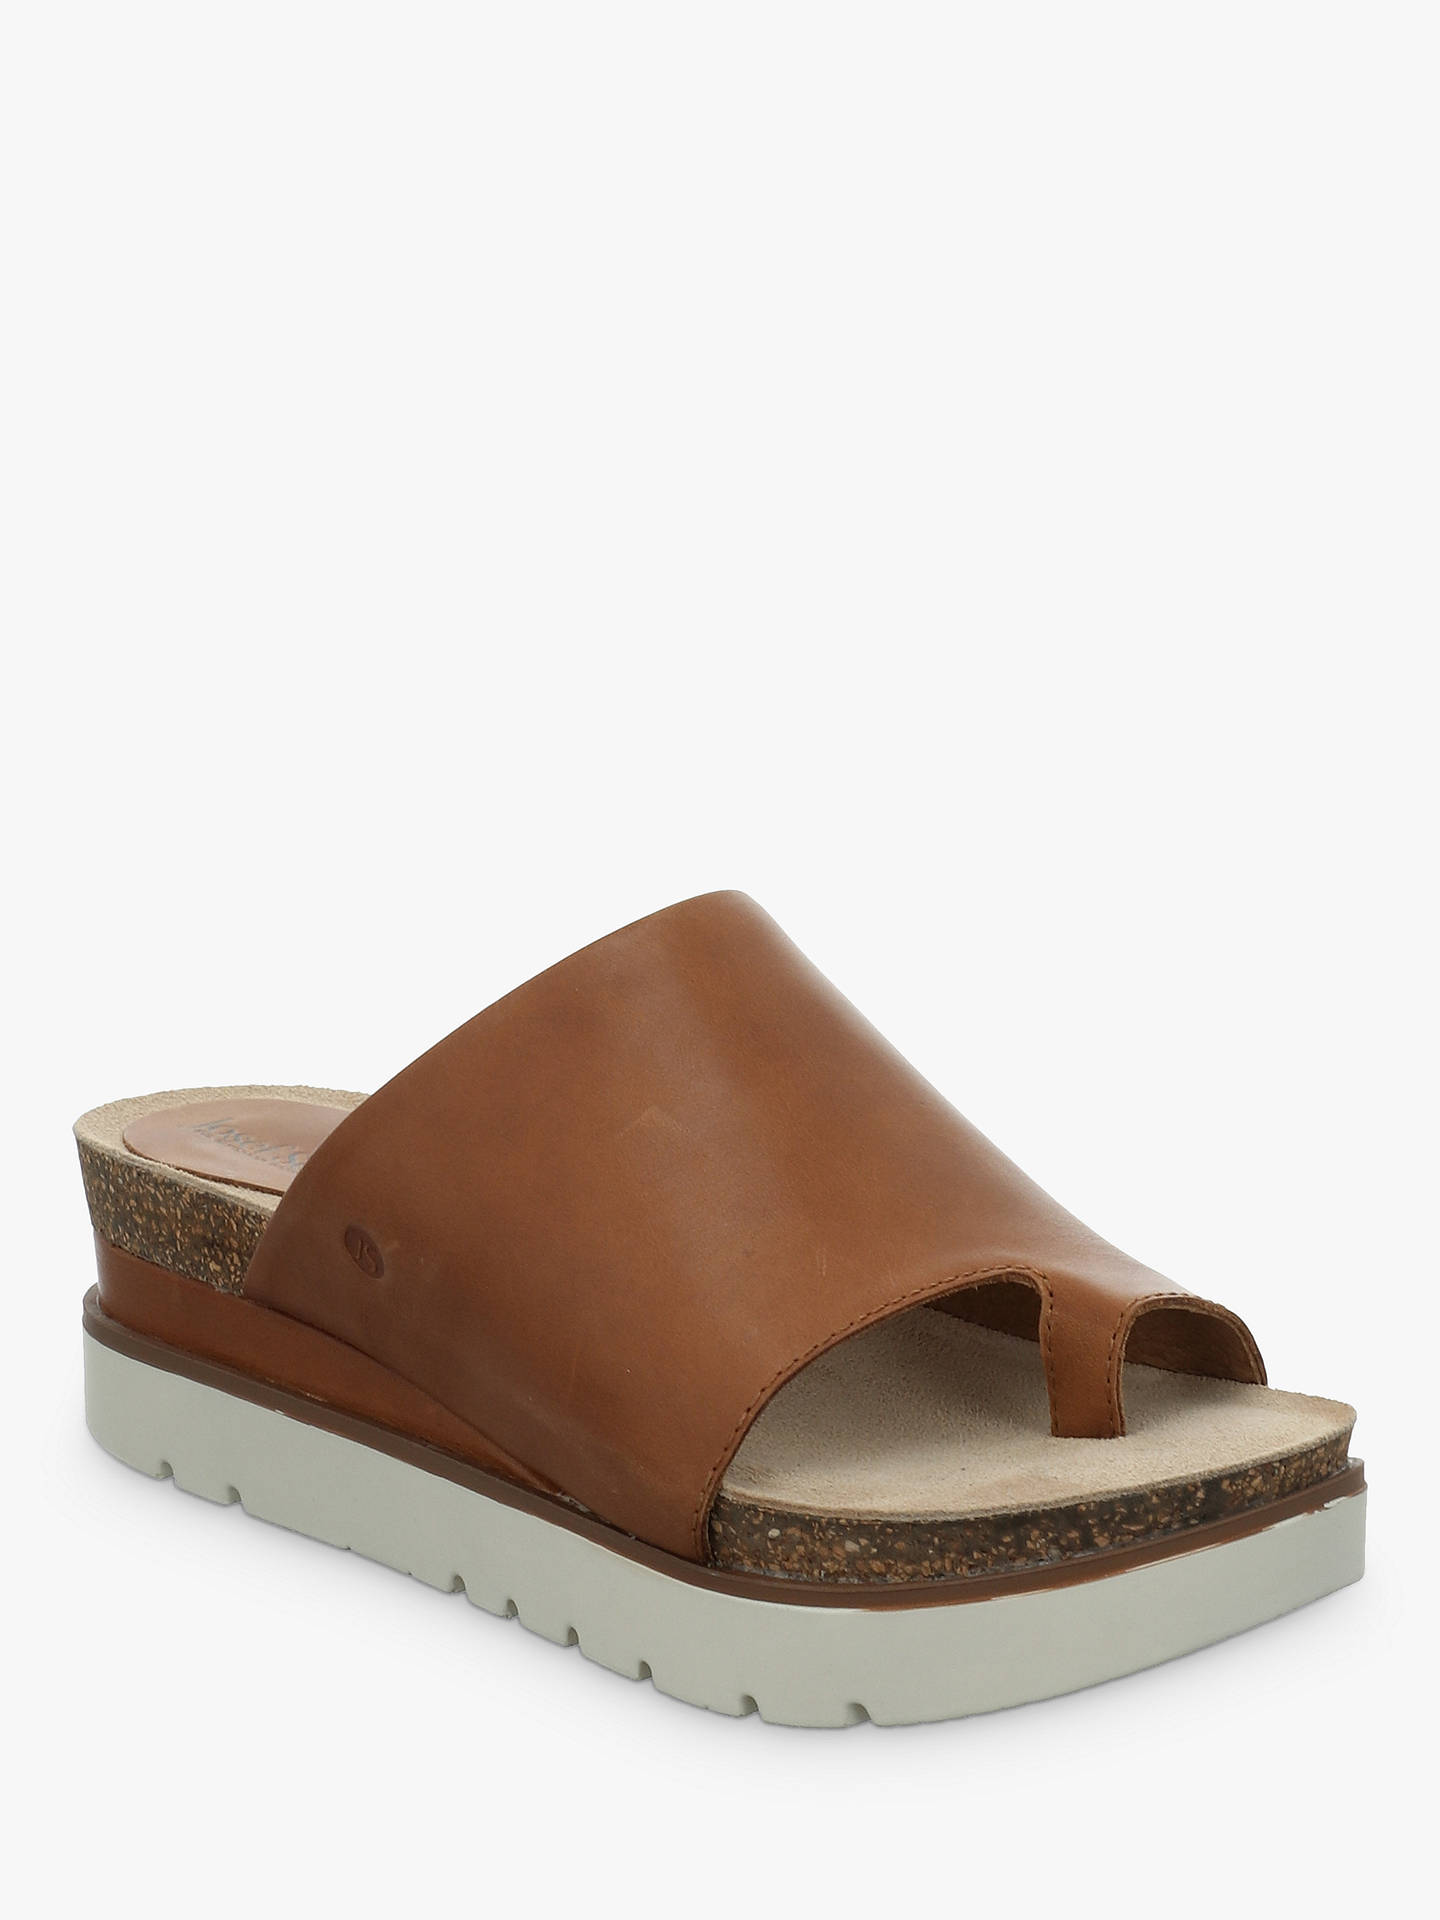 Josef Seibel Clea 06 Leather Platform Wedge Sandals at John Lewis ...